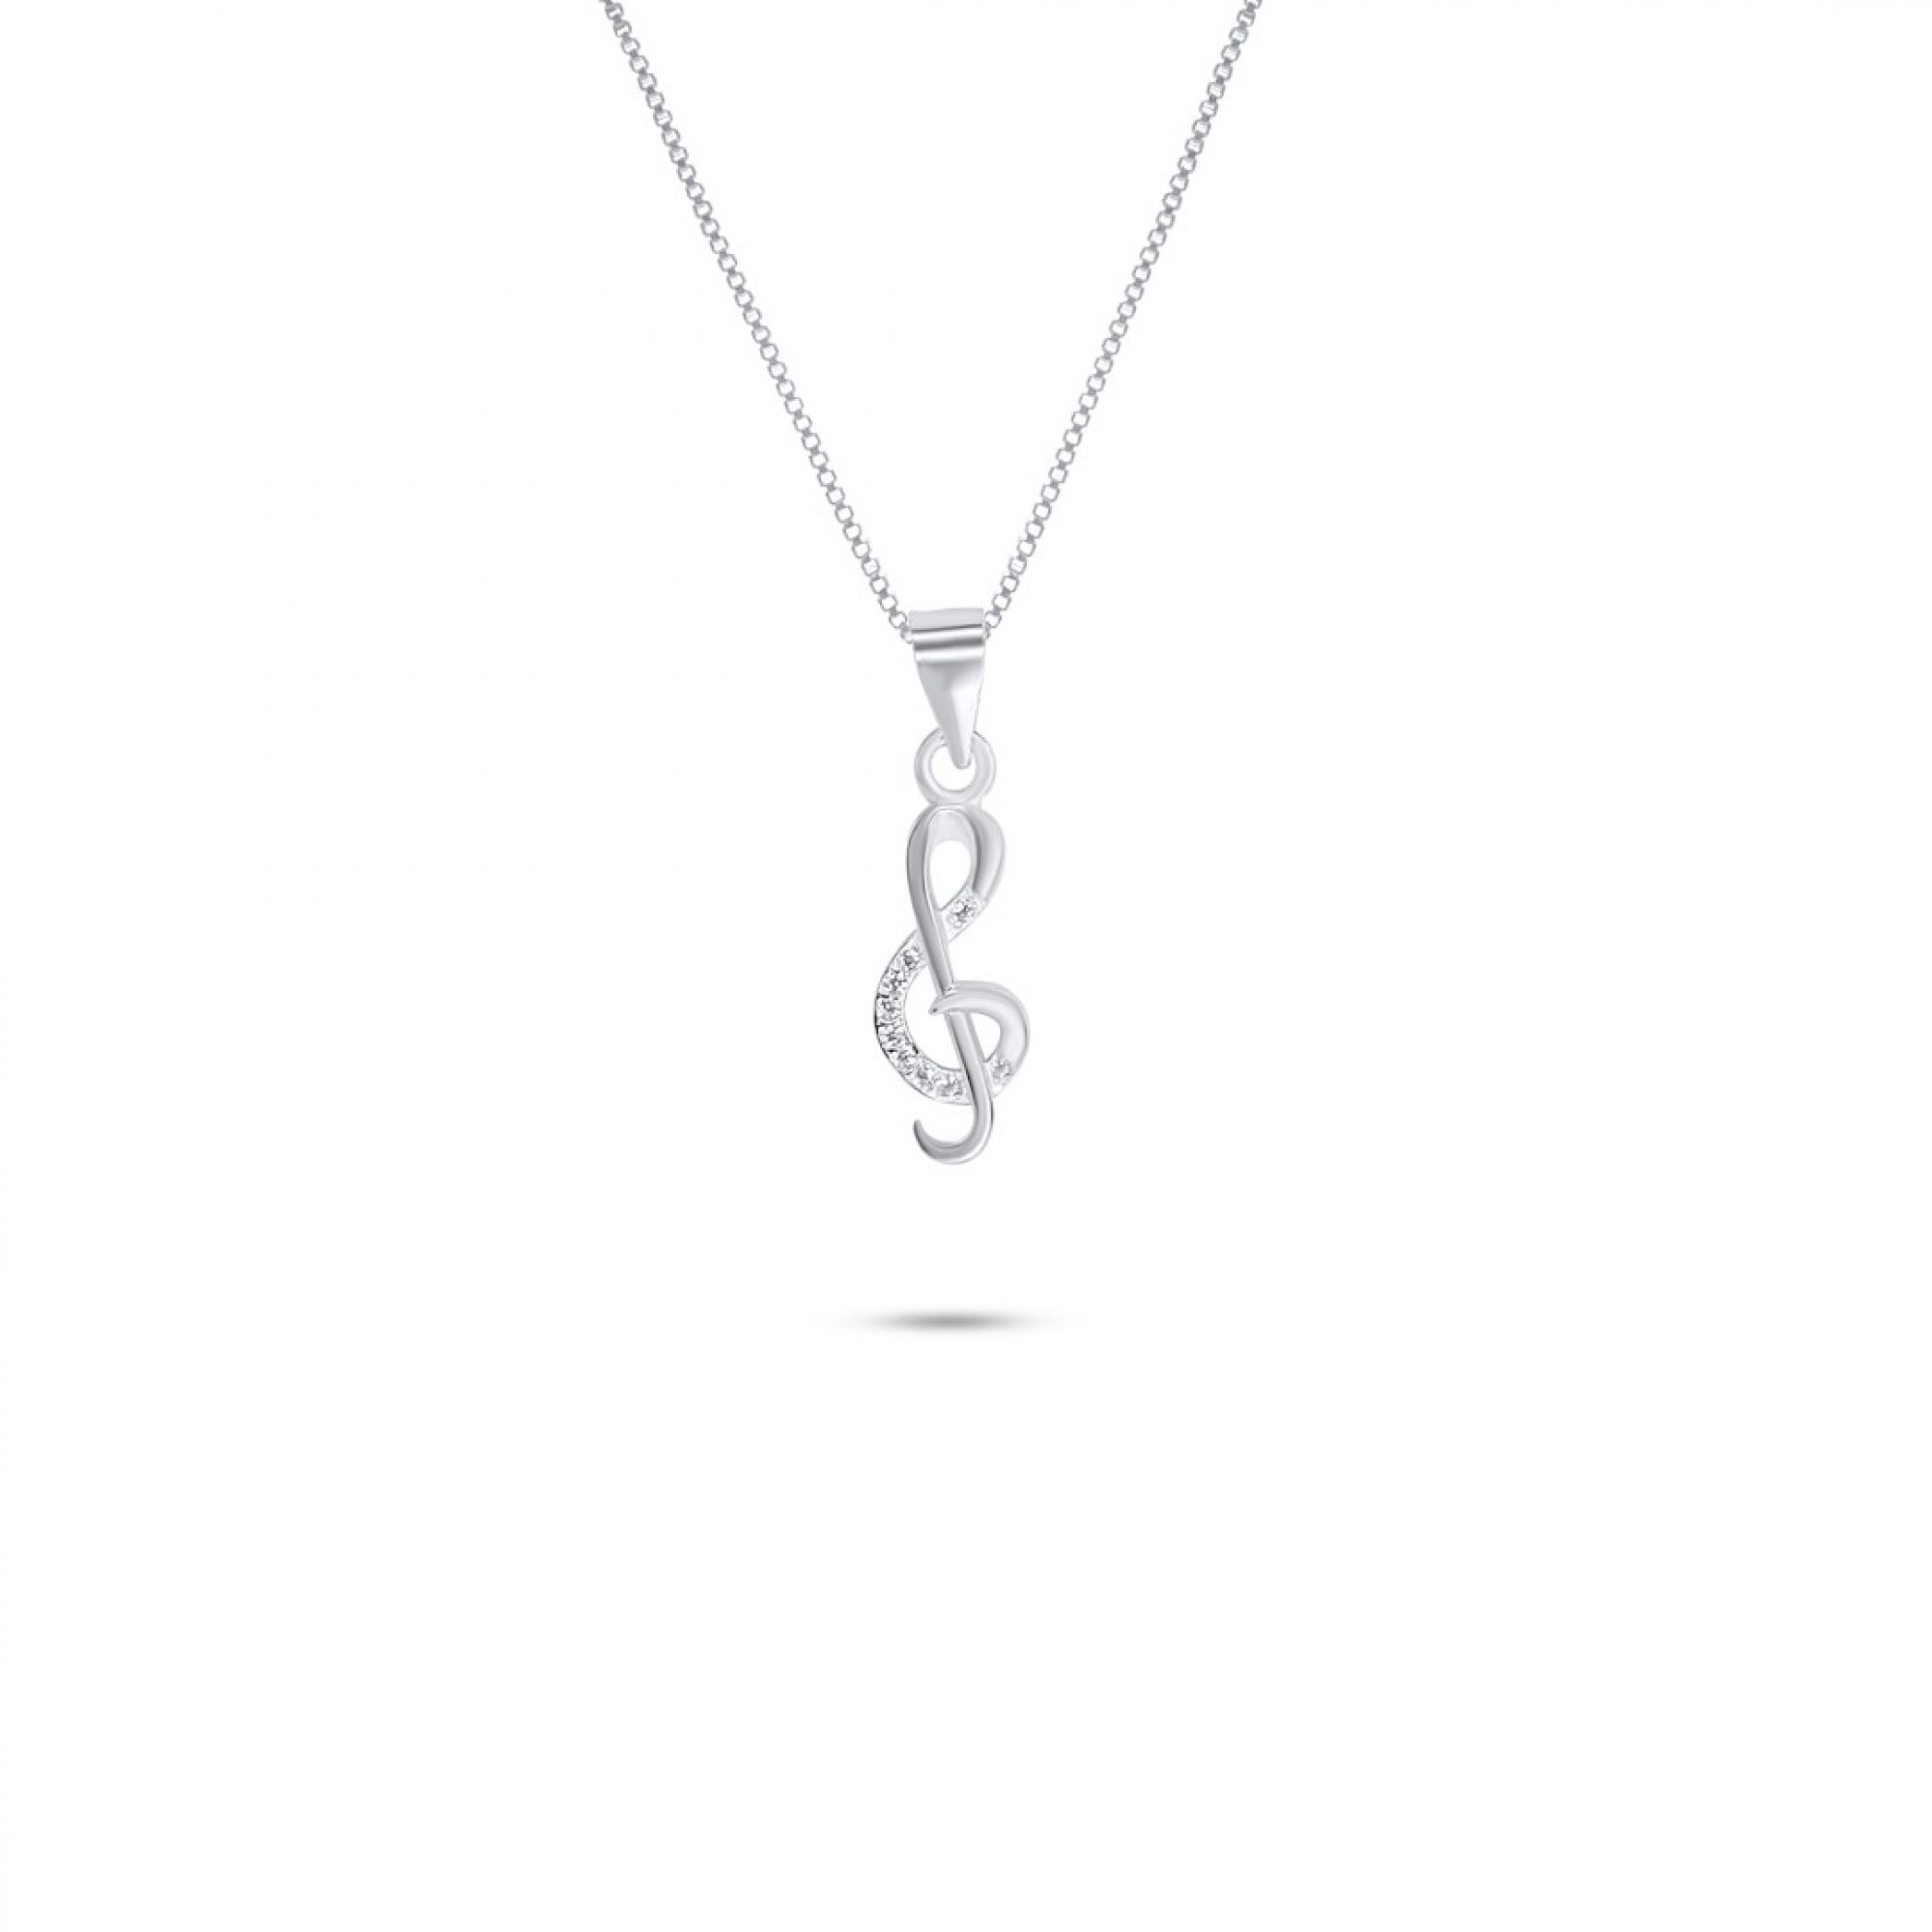 Treble clef necklace with zircon stones